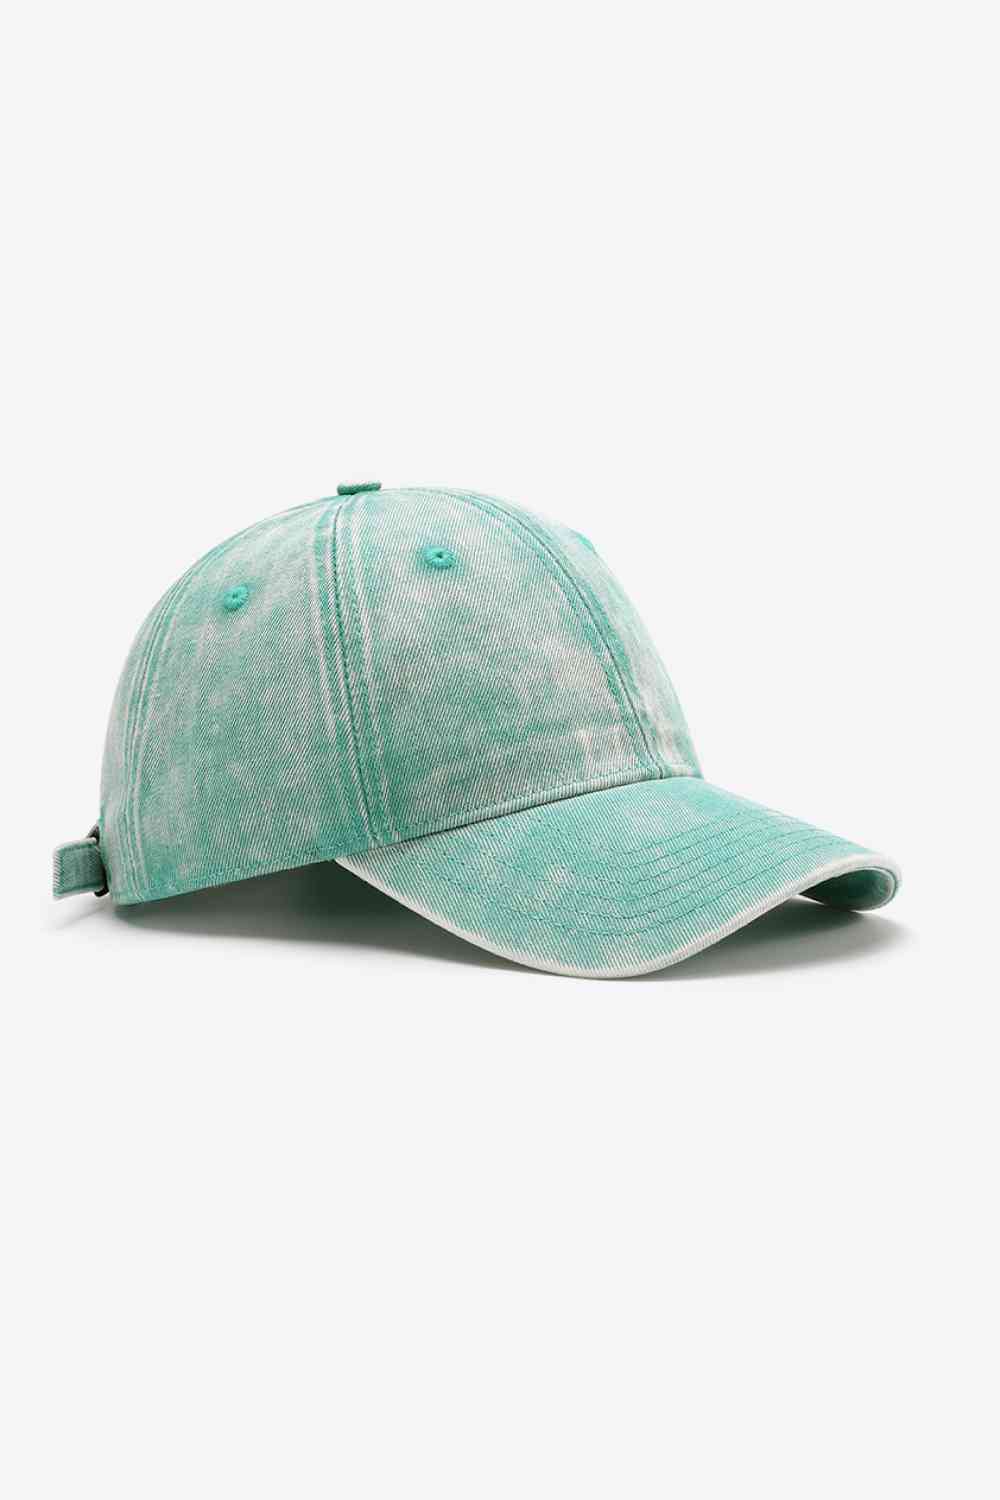 TEEK - Plain Adjustable Baseball Cap HAT TEEK Trend Tiffany Blue One Size 